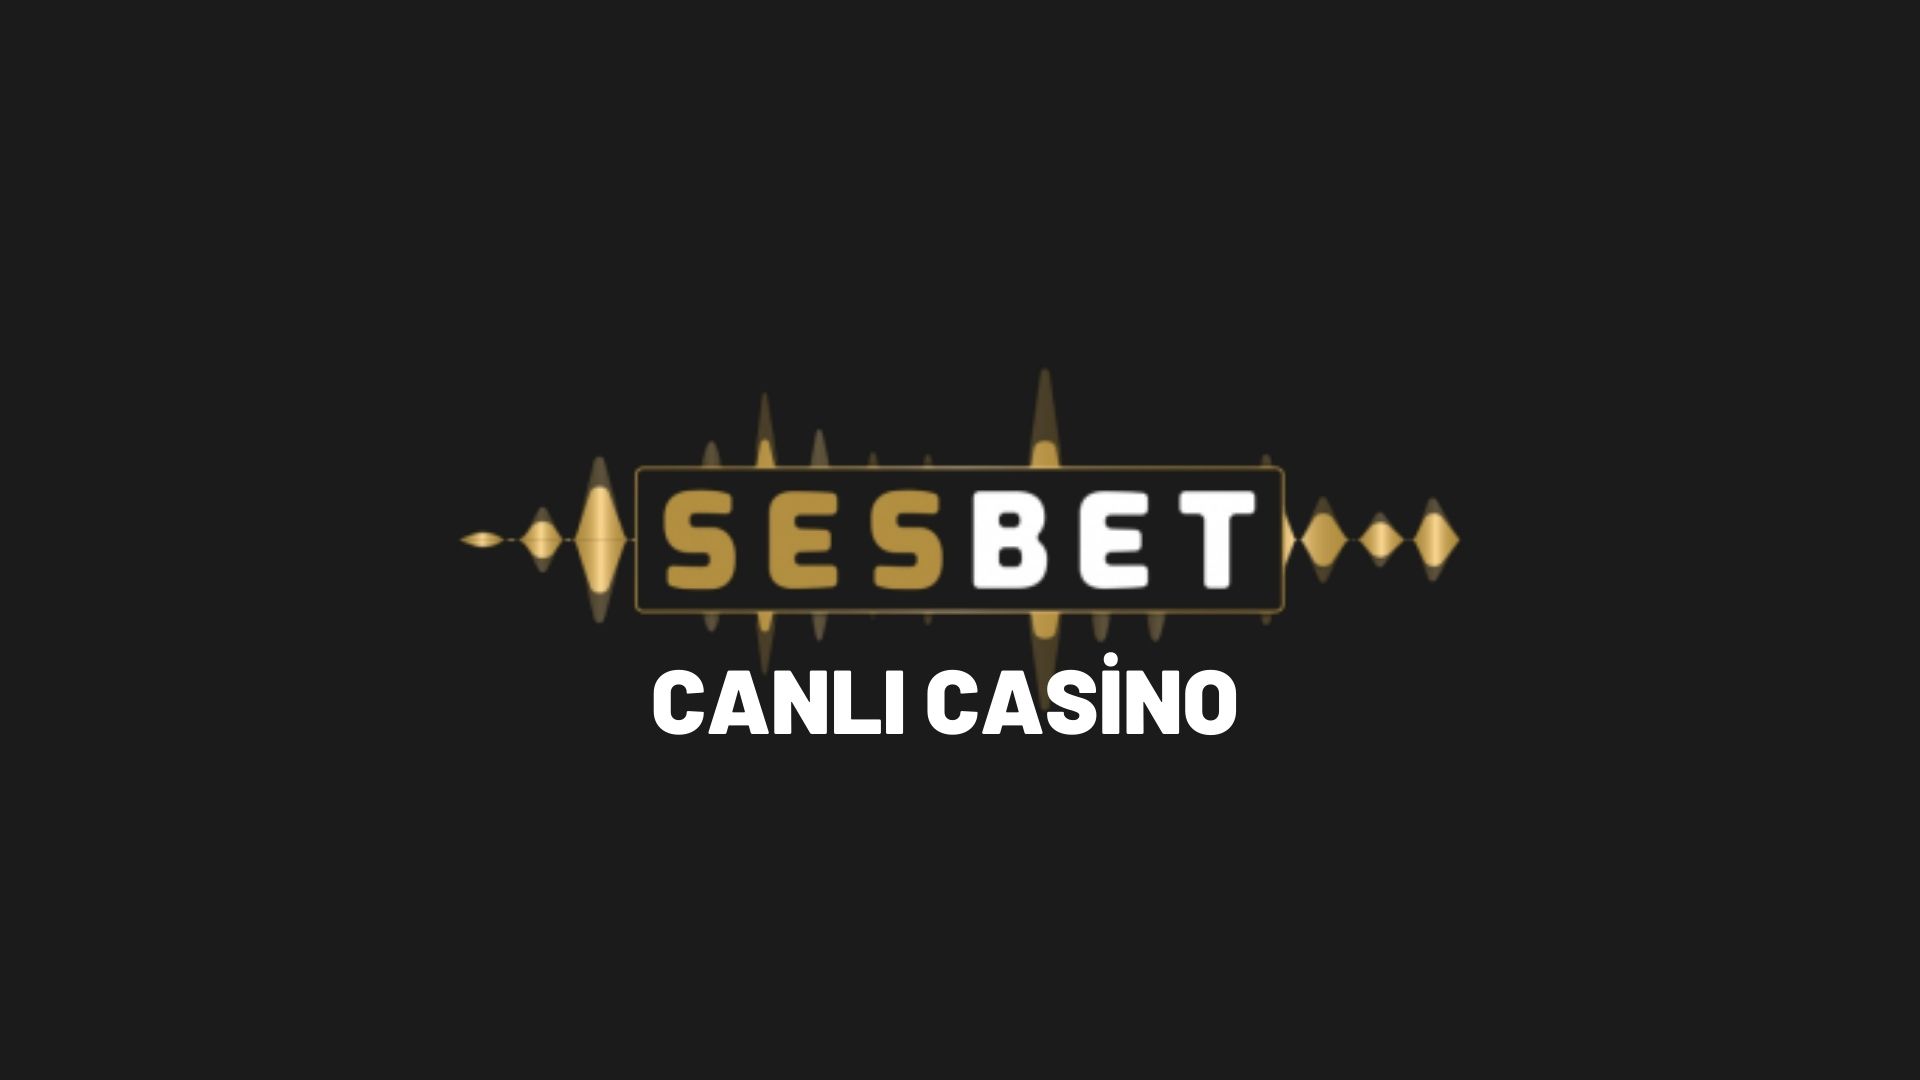 sesbet-canli-casino